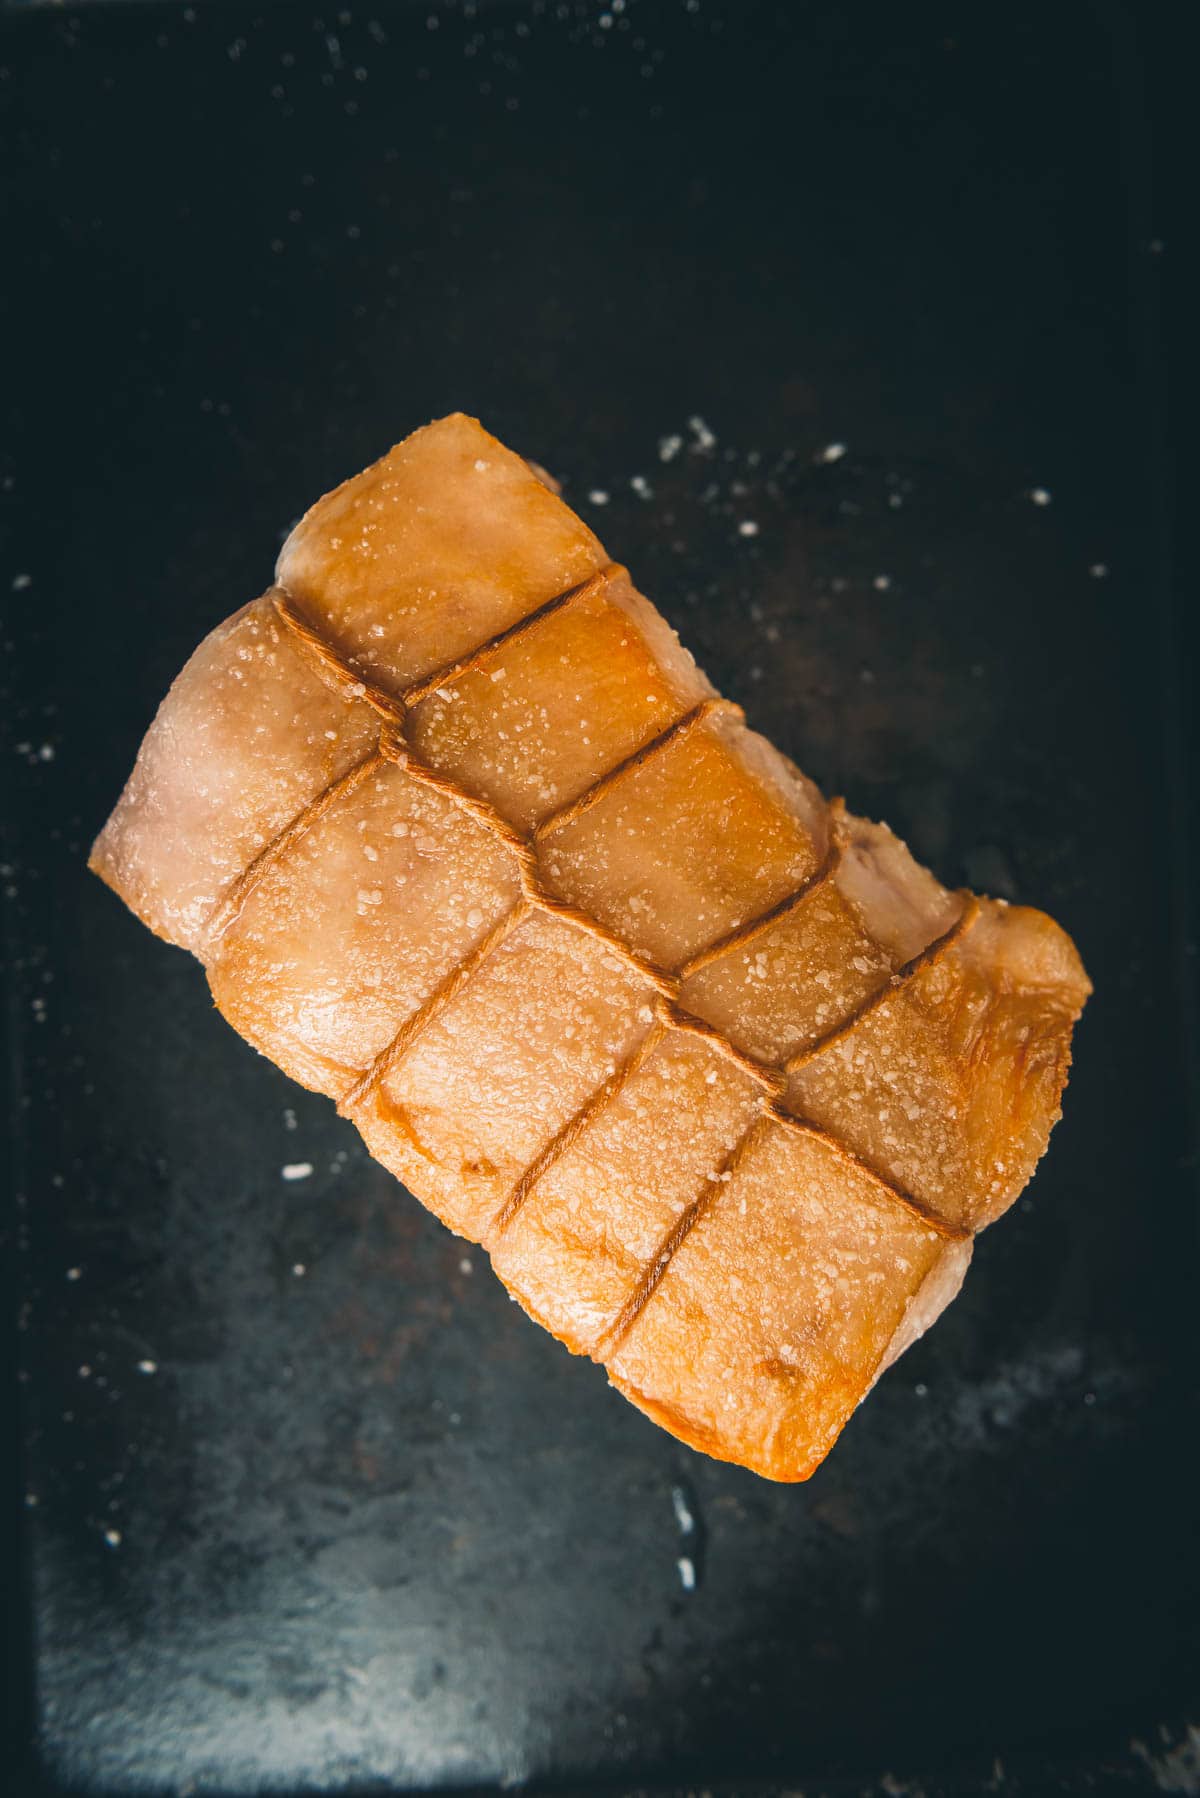 A pork loin on a baking sheet to show the crispy skin.